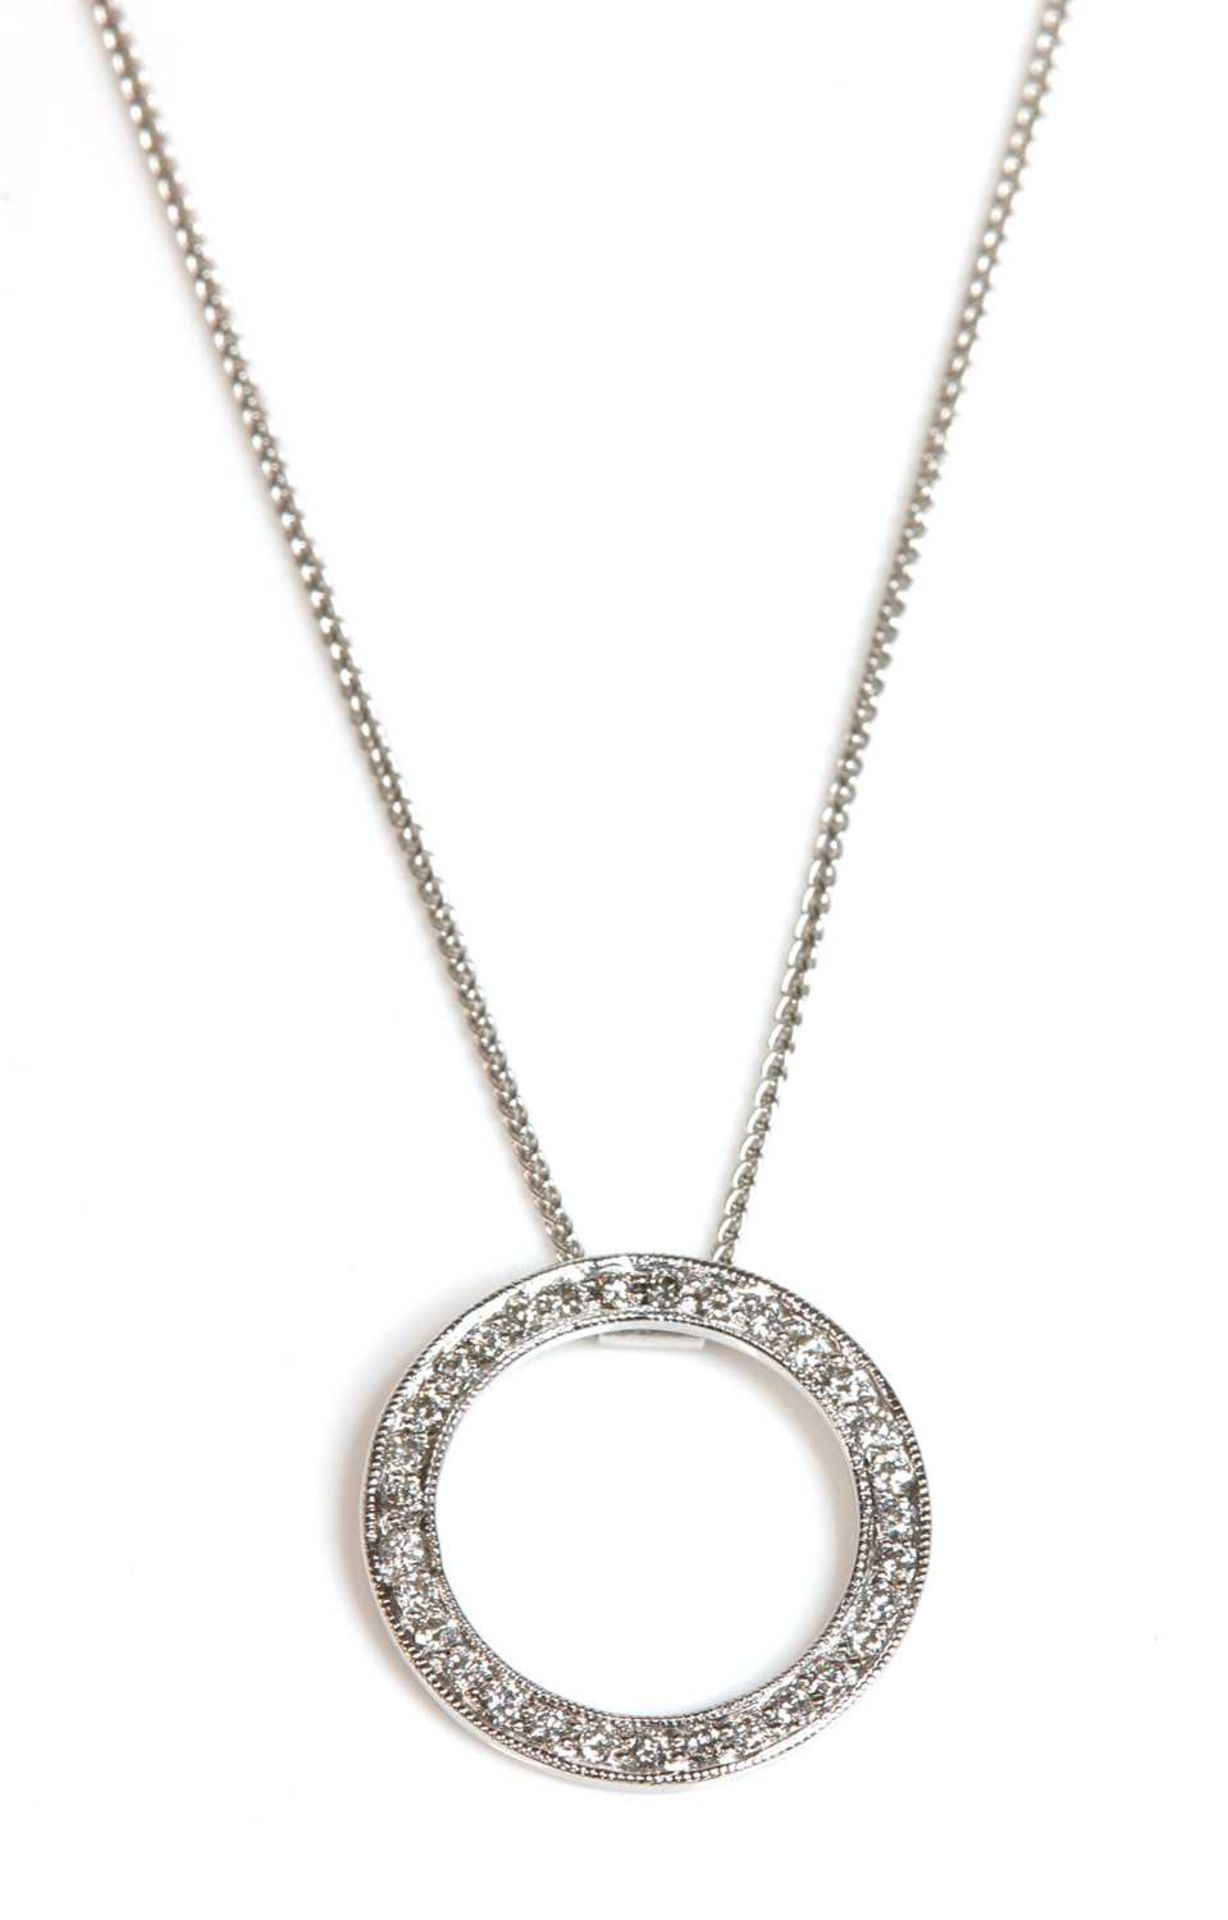 A 9ct white gold diamond set hoop pendant,